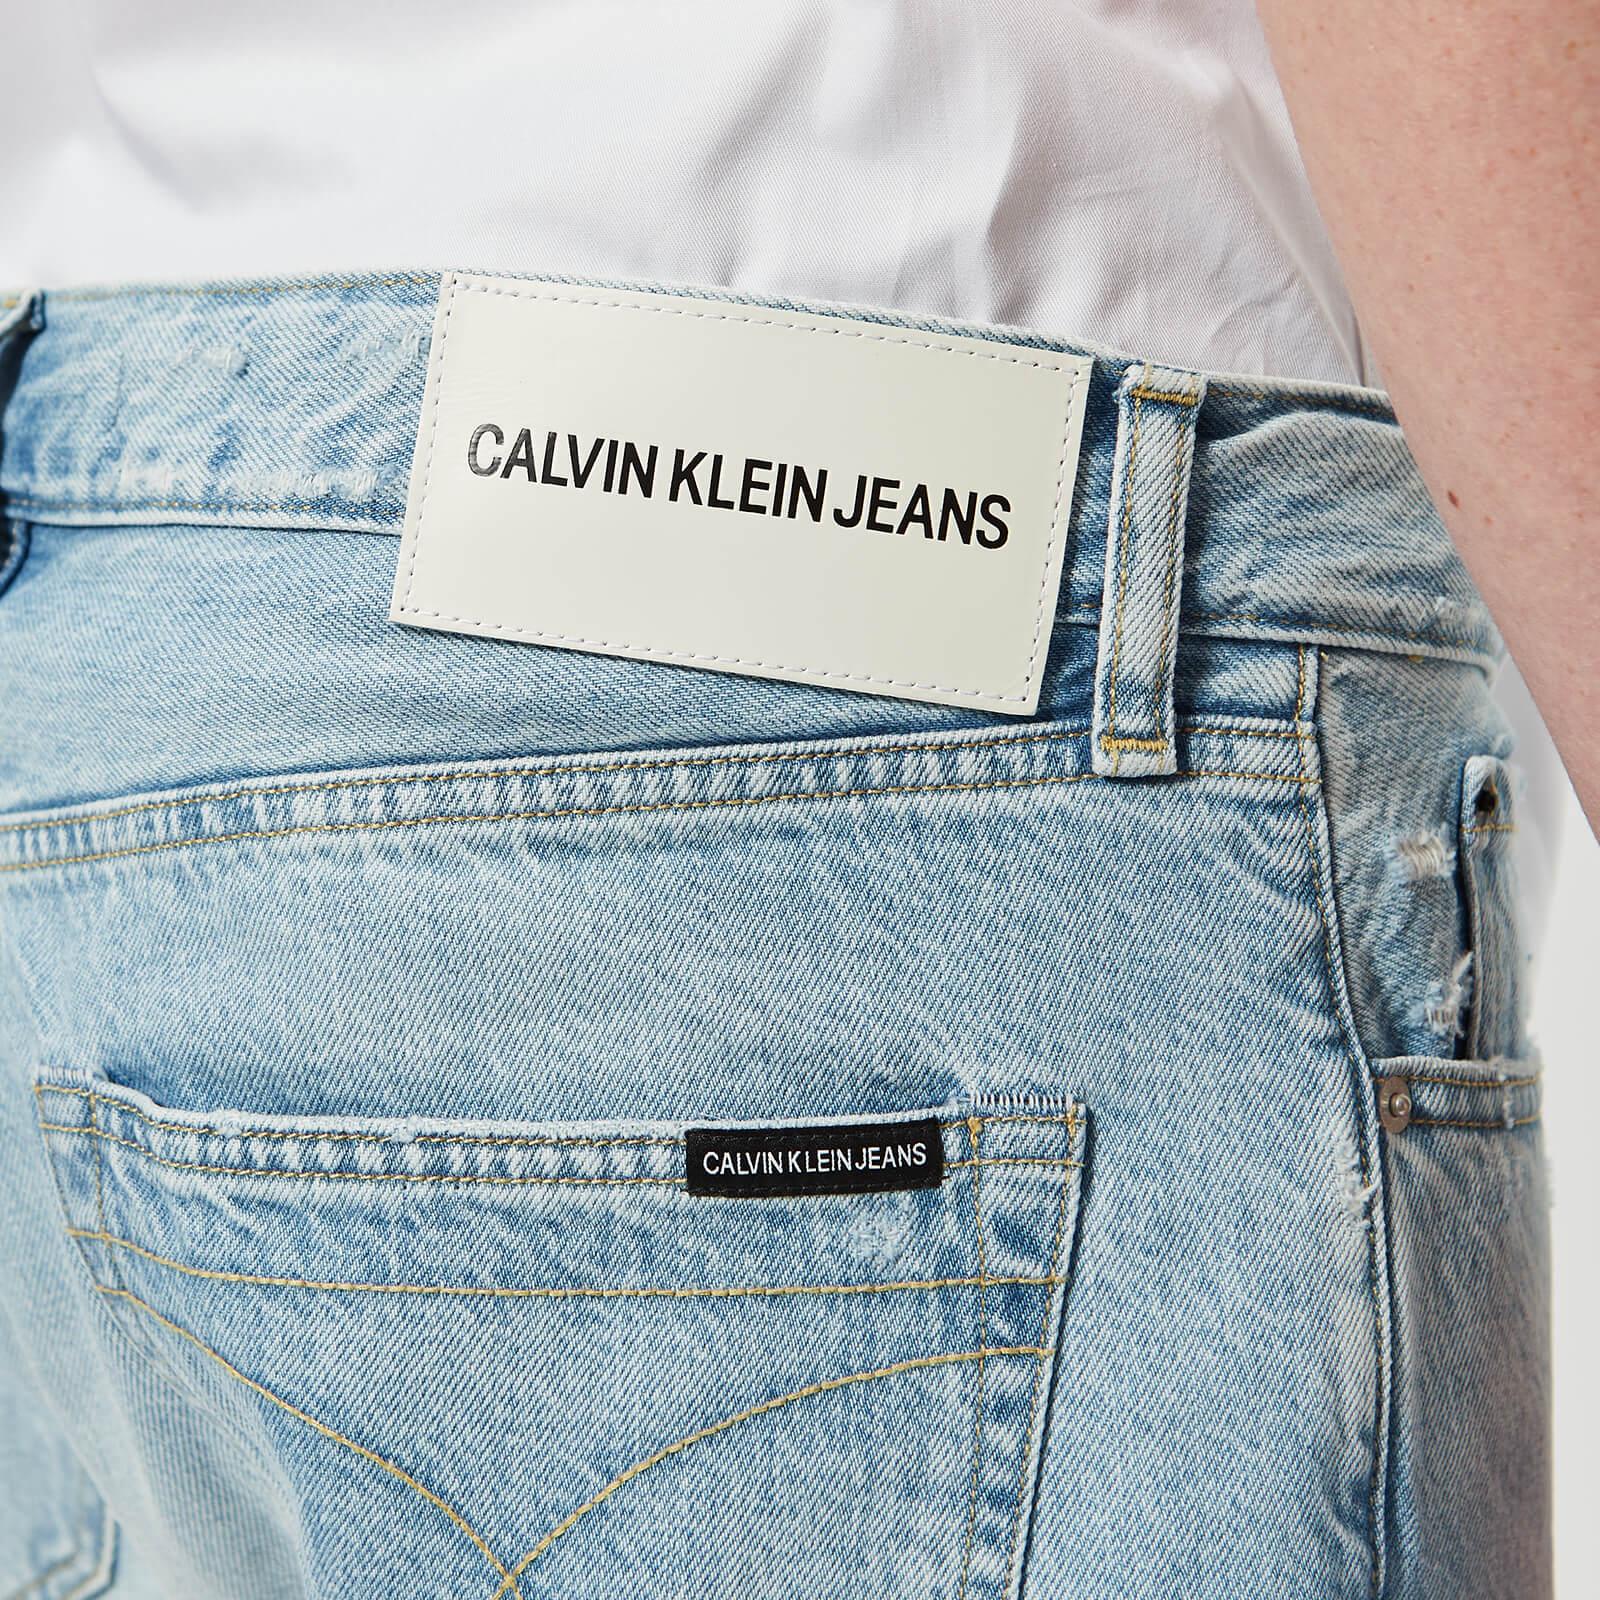 Calvin Klein Jeans Ckj 056 Flash Sales, 58% OFF | www 